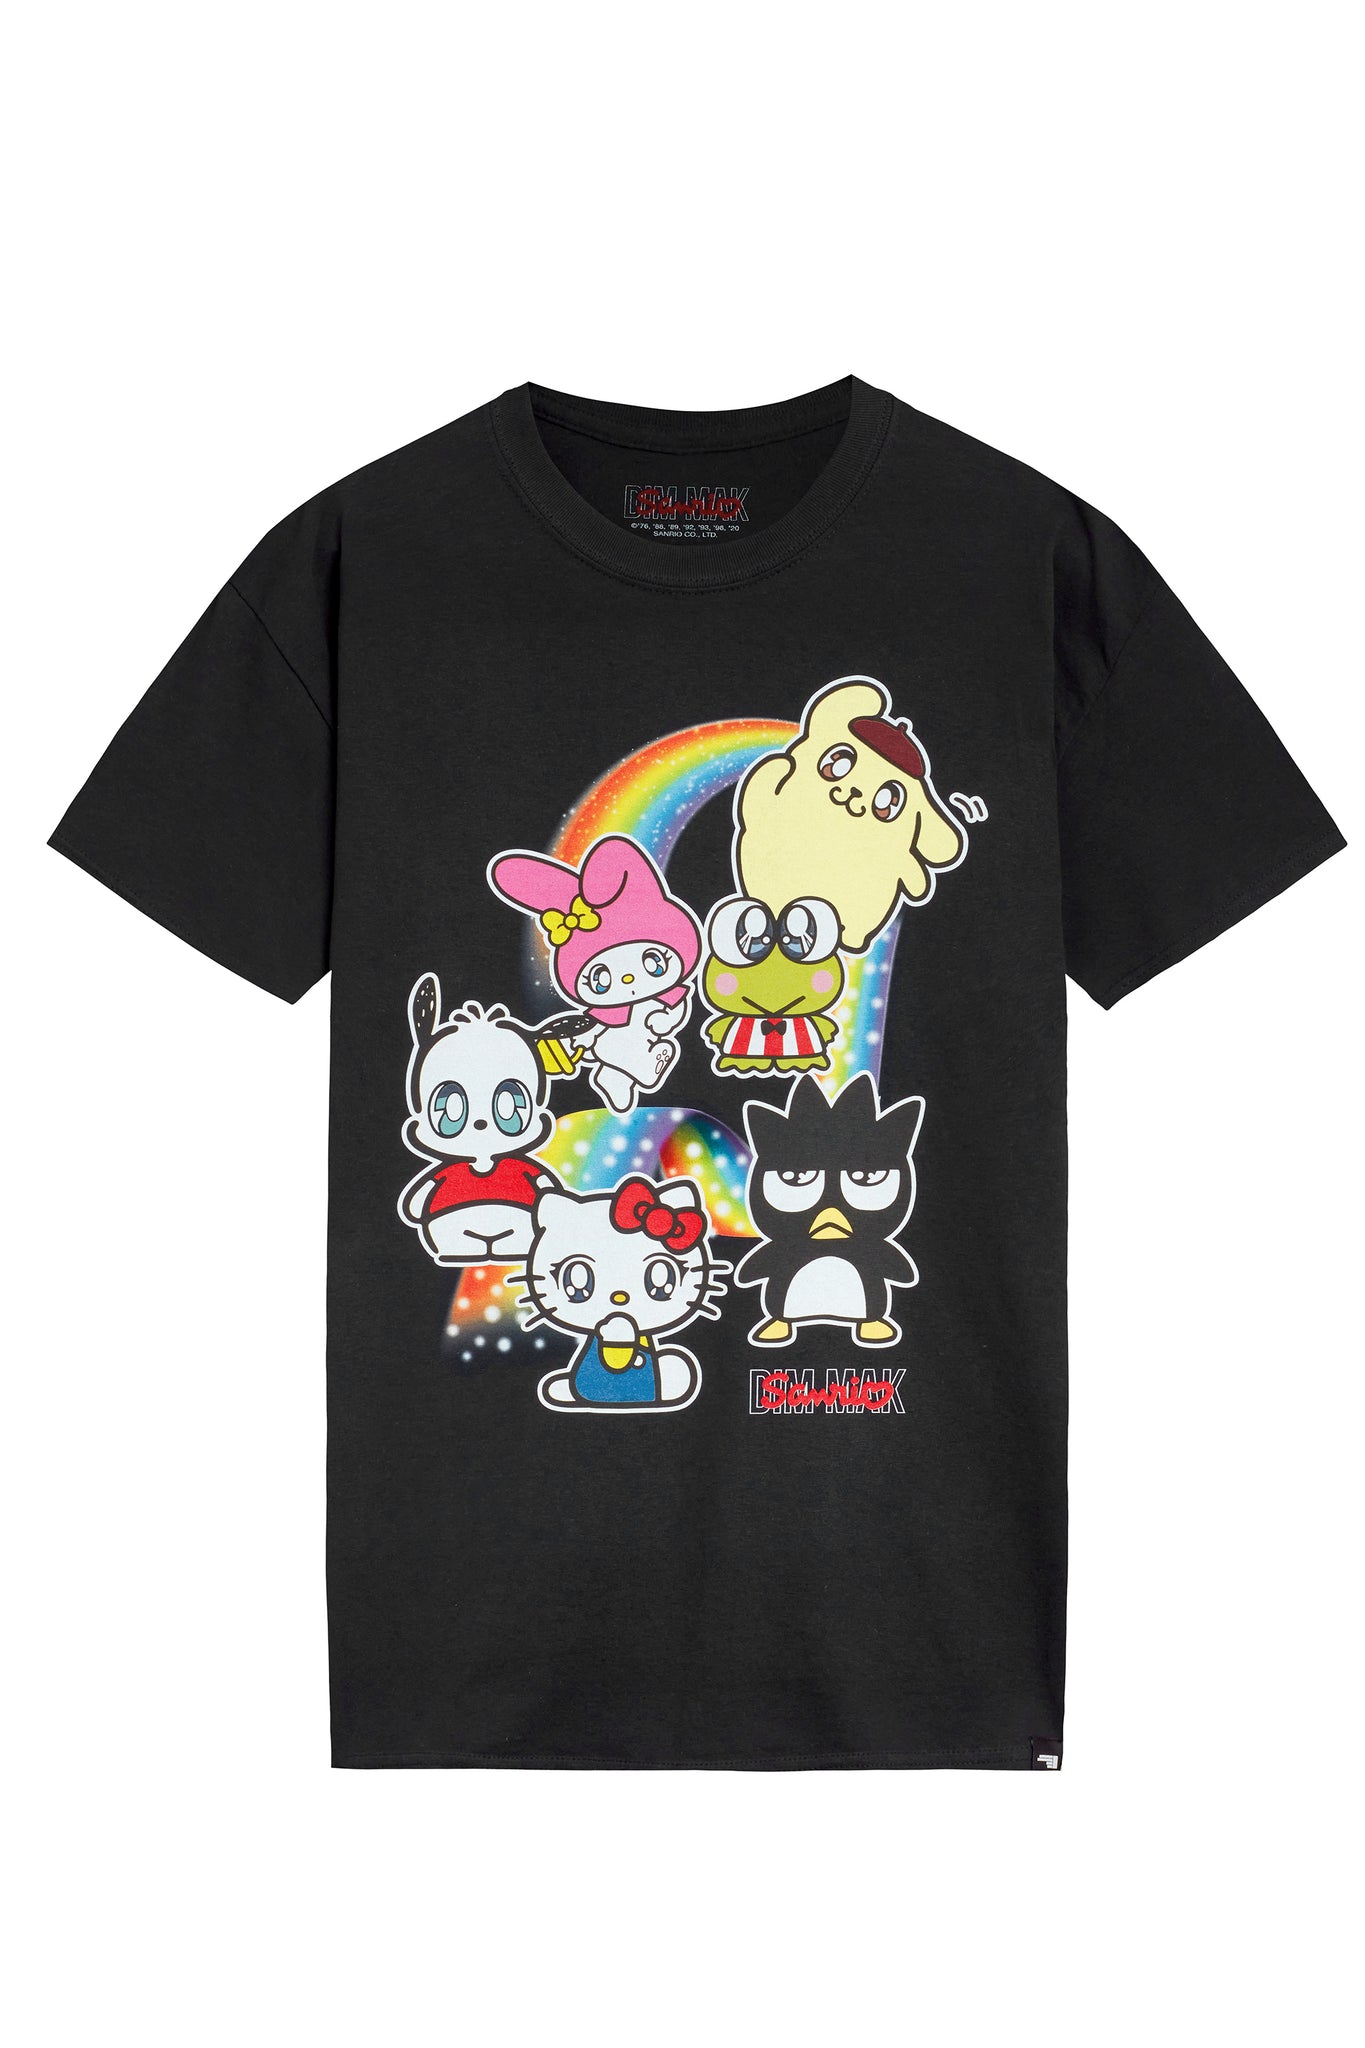 Dim Mak x Sanrio - “Rainbow T-Shirt” – Black